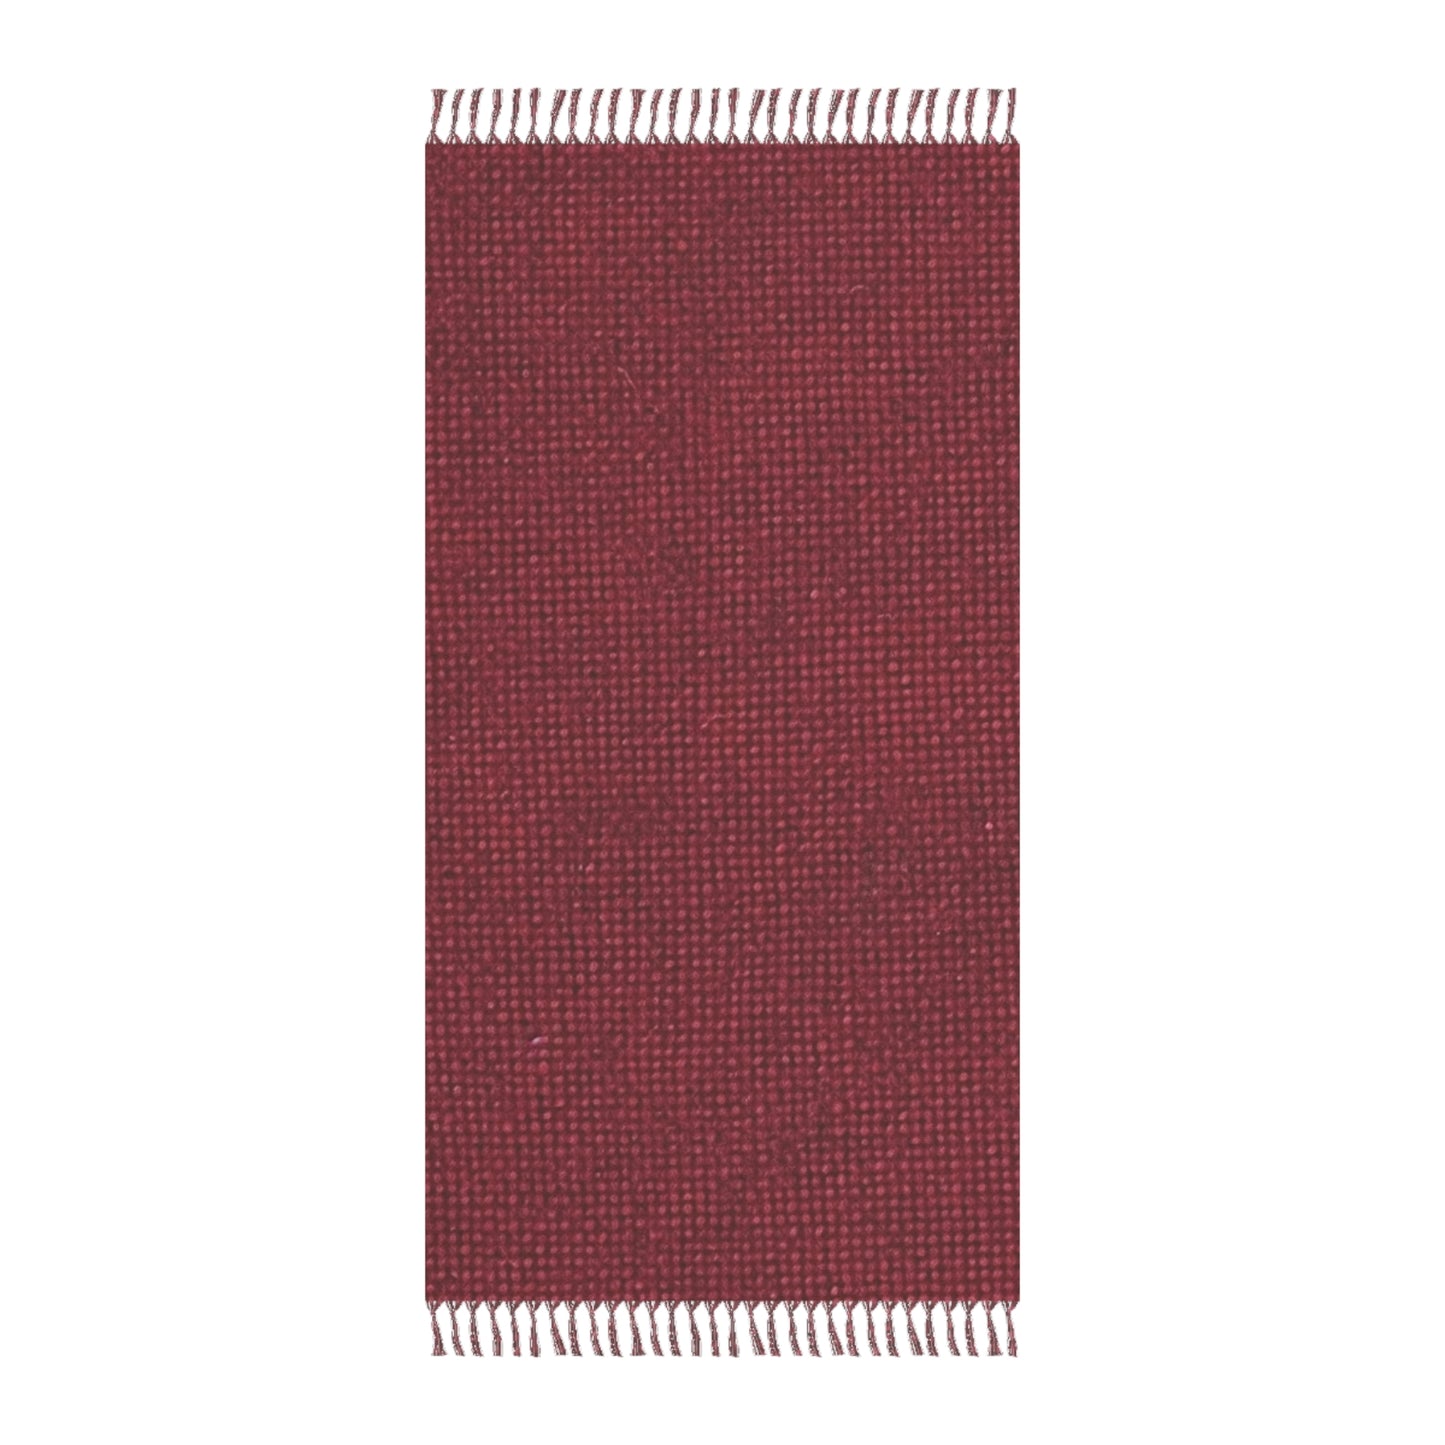 Seamless Texture - Maroon/Burgundy Denim-Inspired Fabric - Boho Beach Cloth